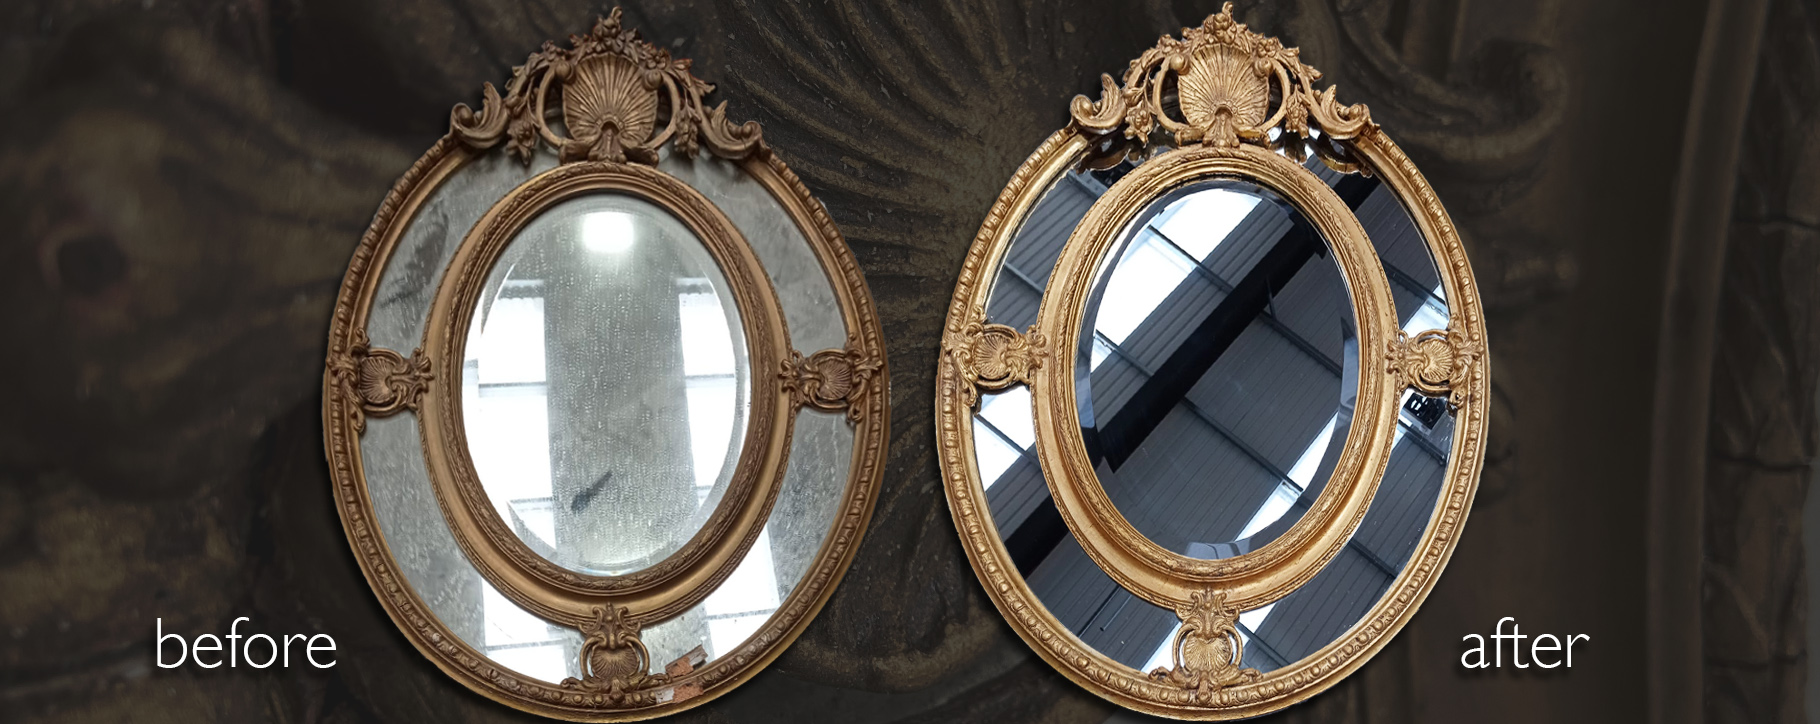 Mirror frame restored gilding